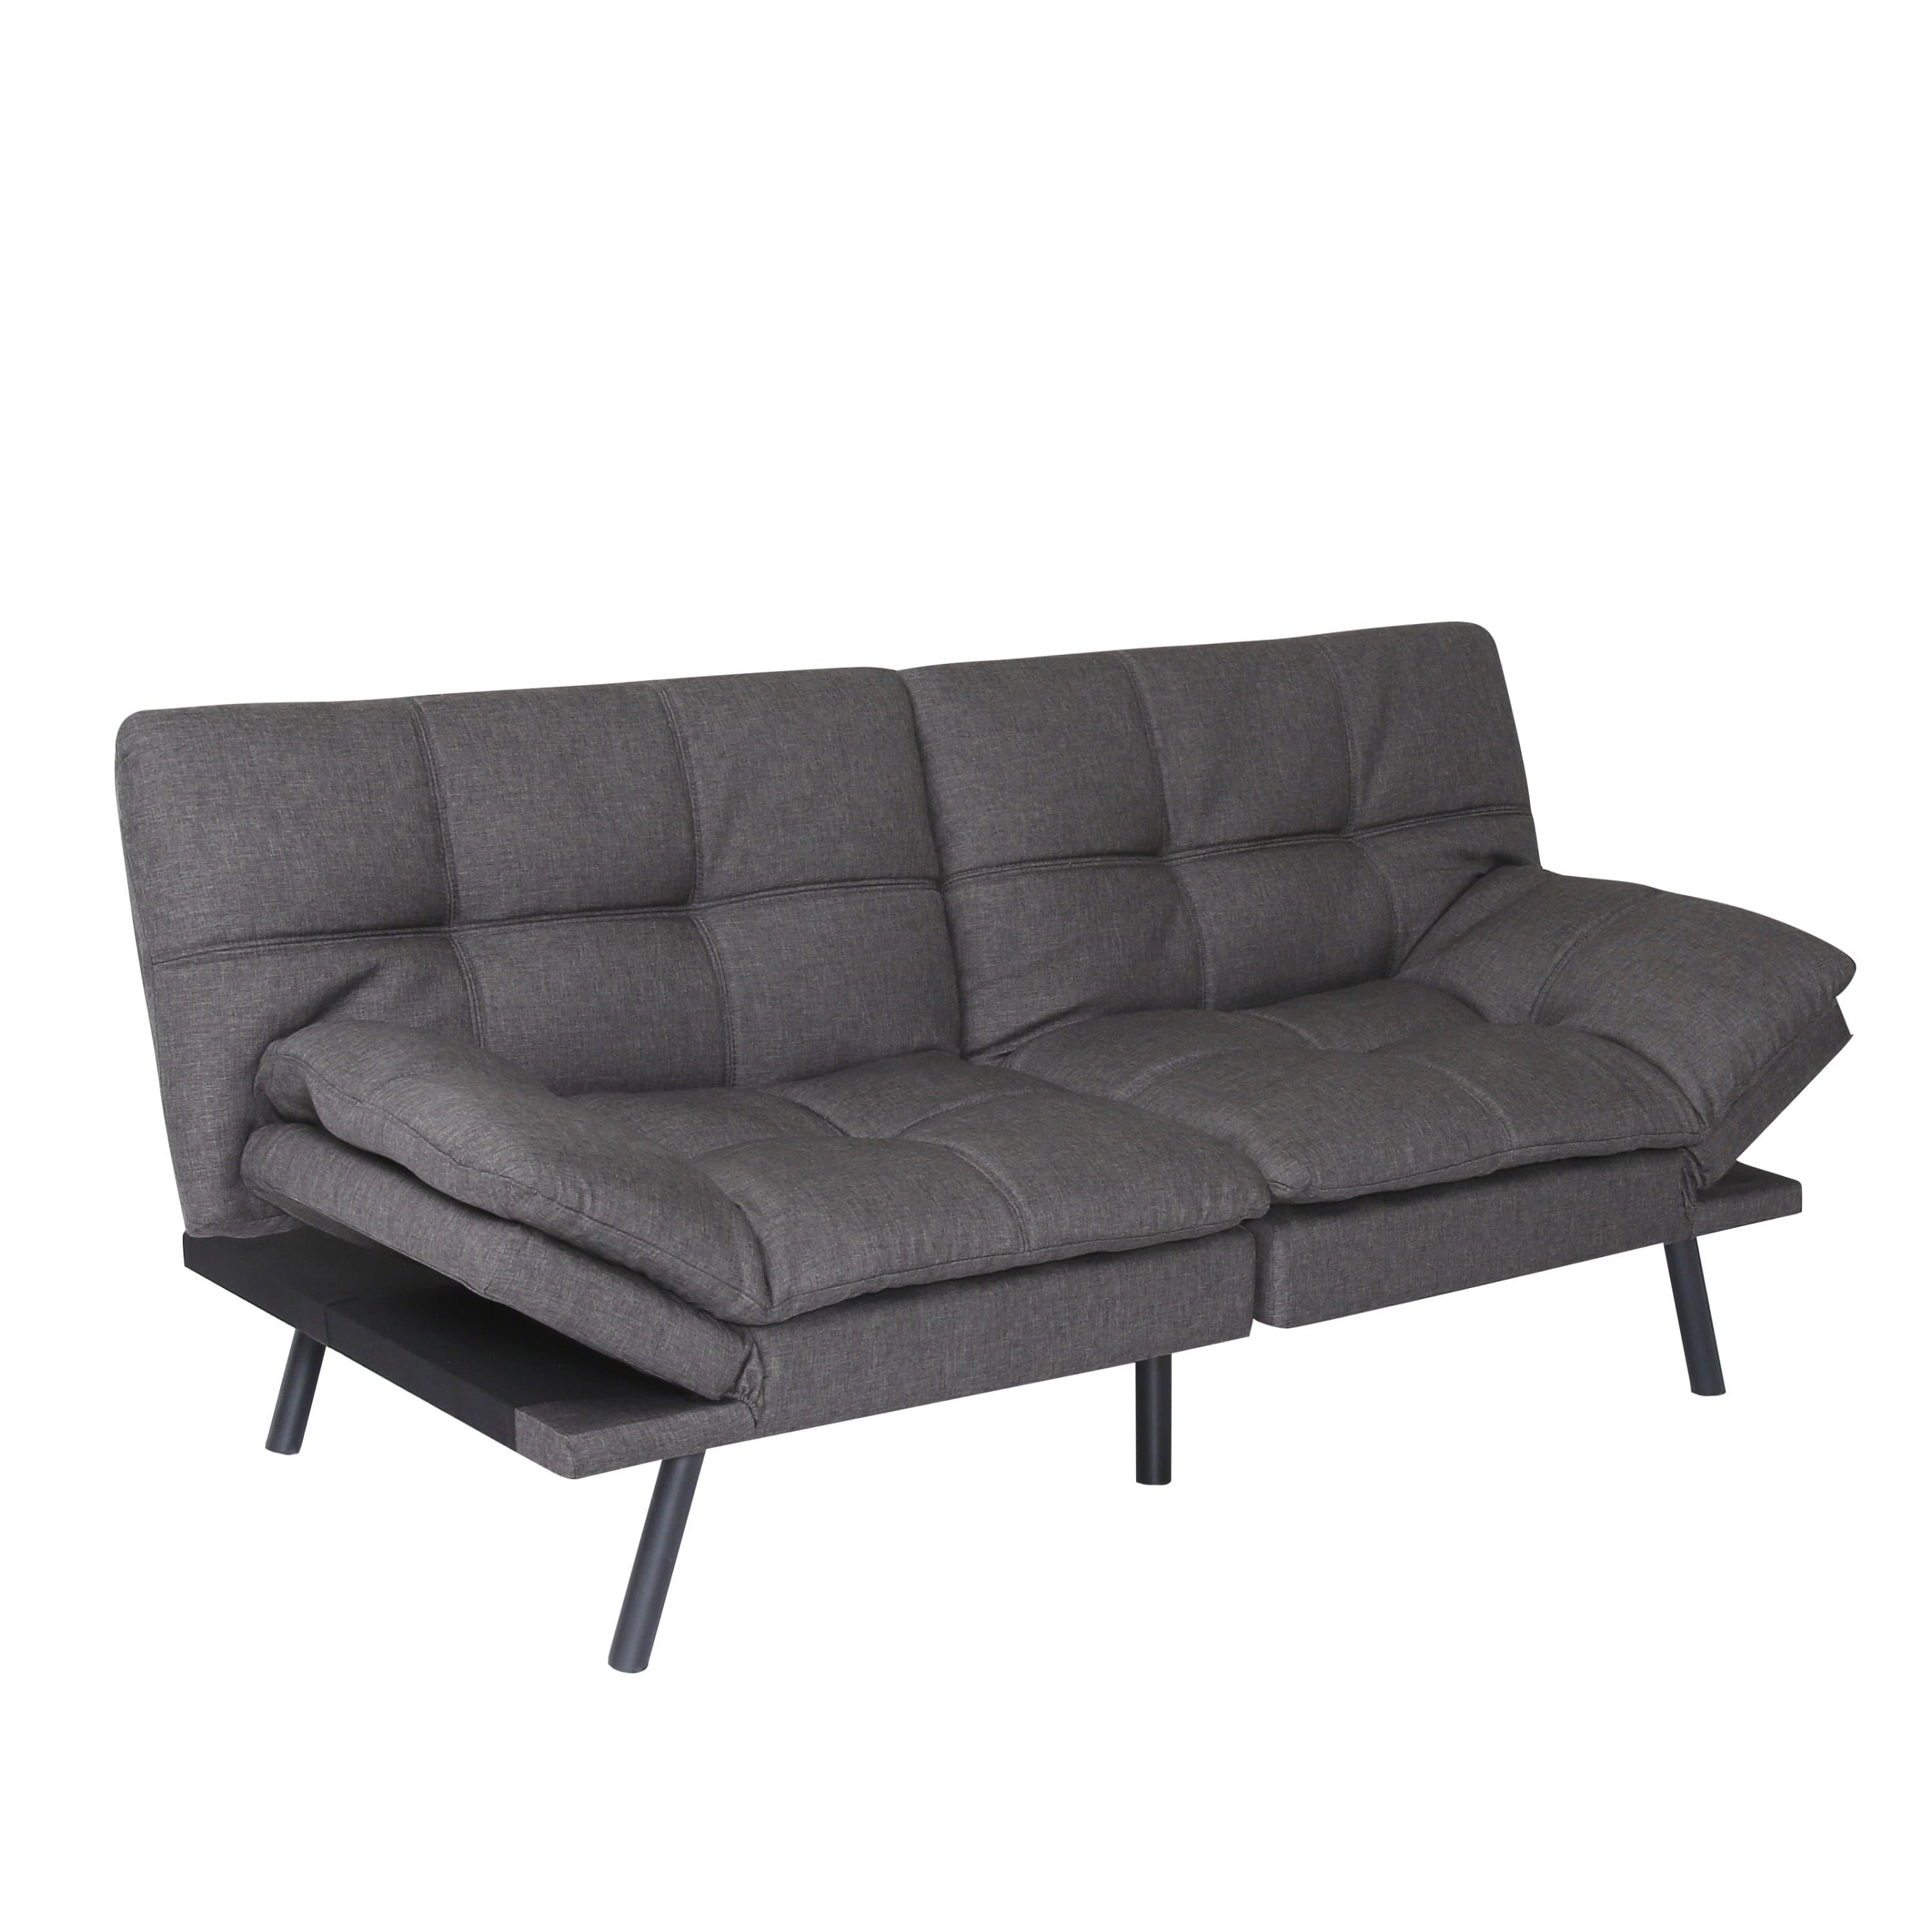 Shop Convertible Memory Foam Futon Couch Bed, Modern Folding Sleeper Sofa-SF267FADGY Mademoiselle Home Decor